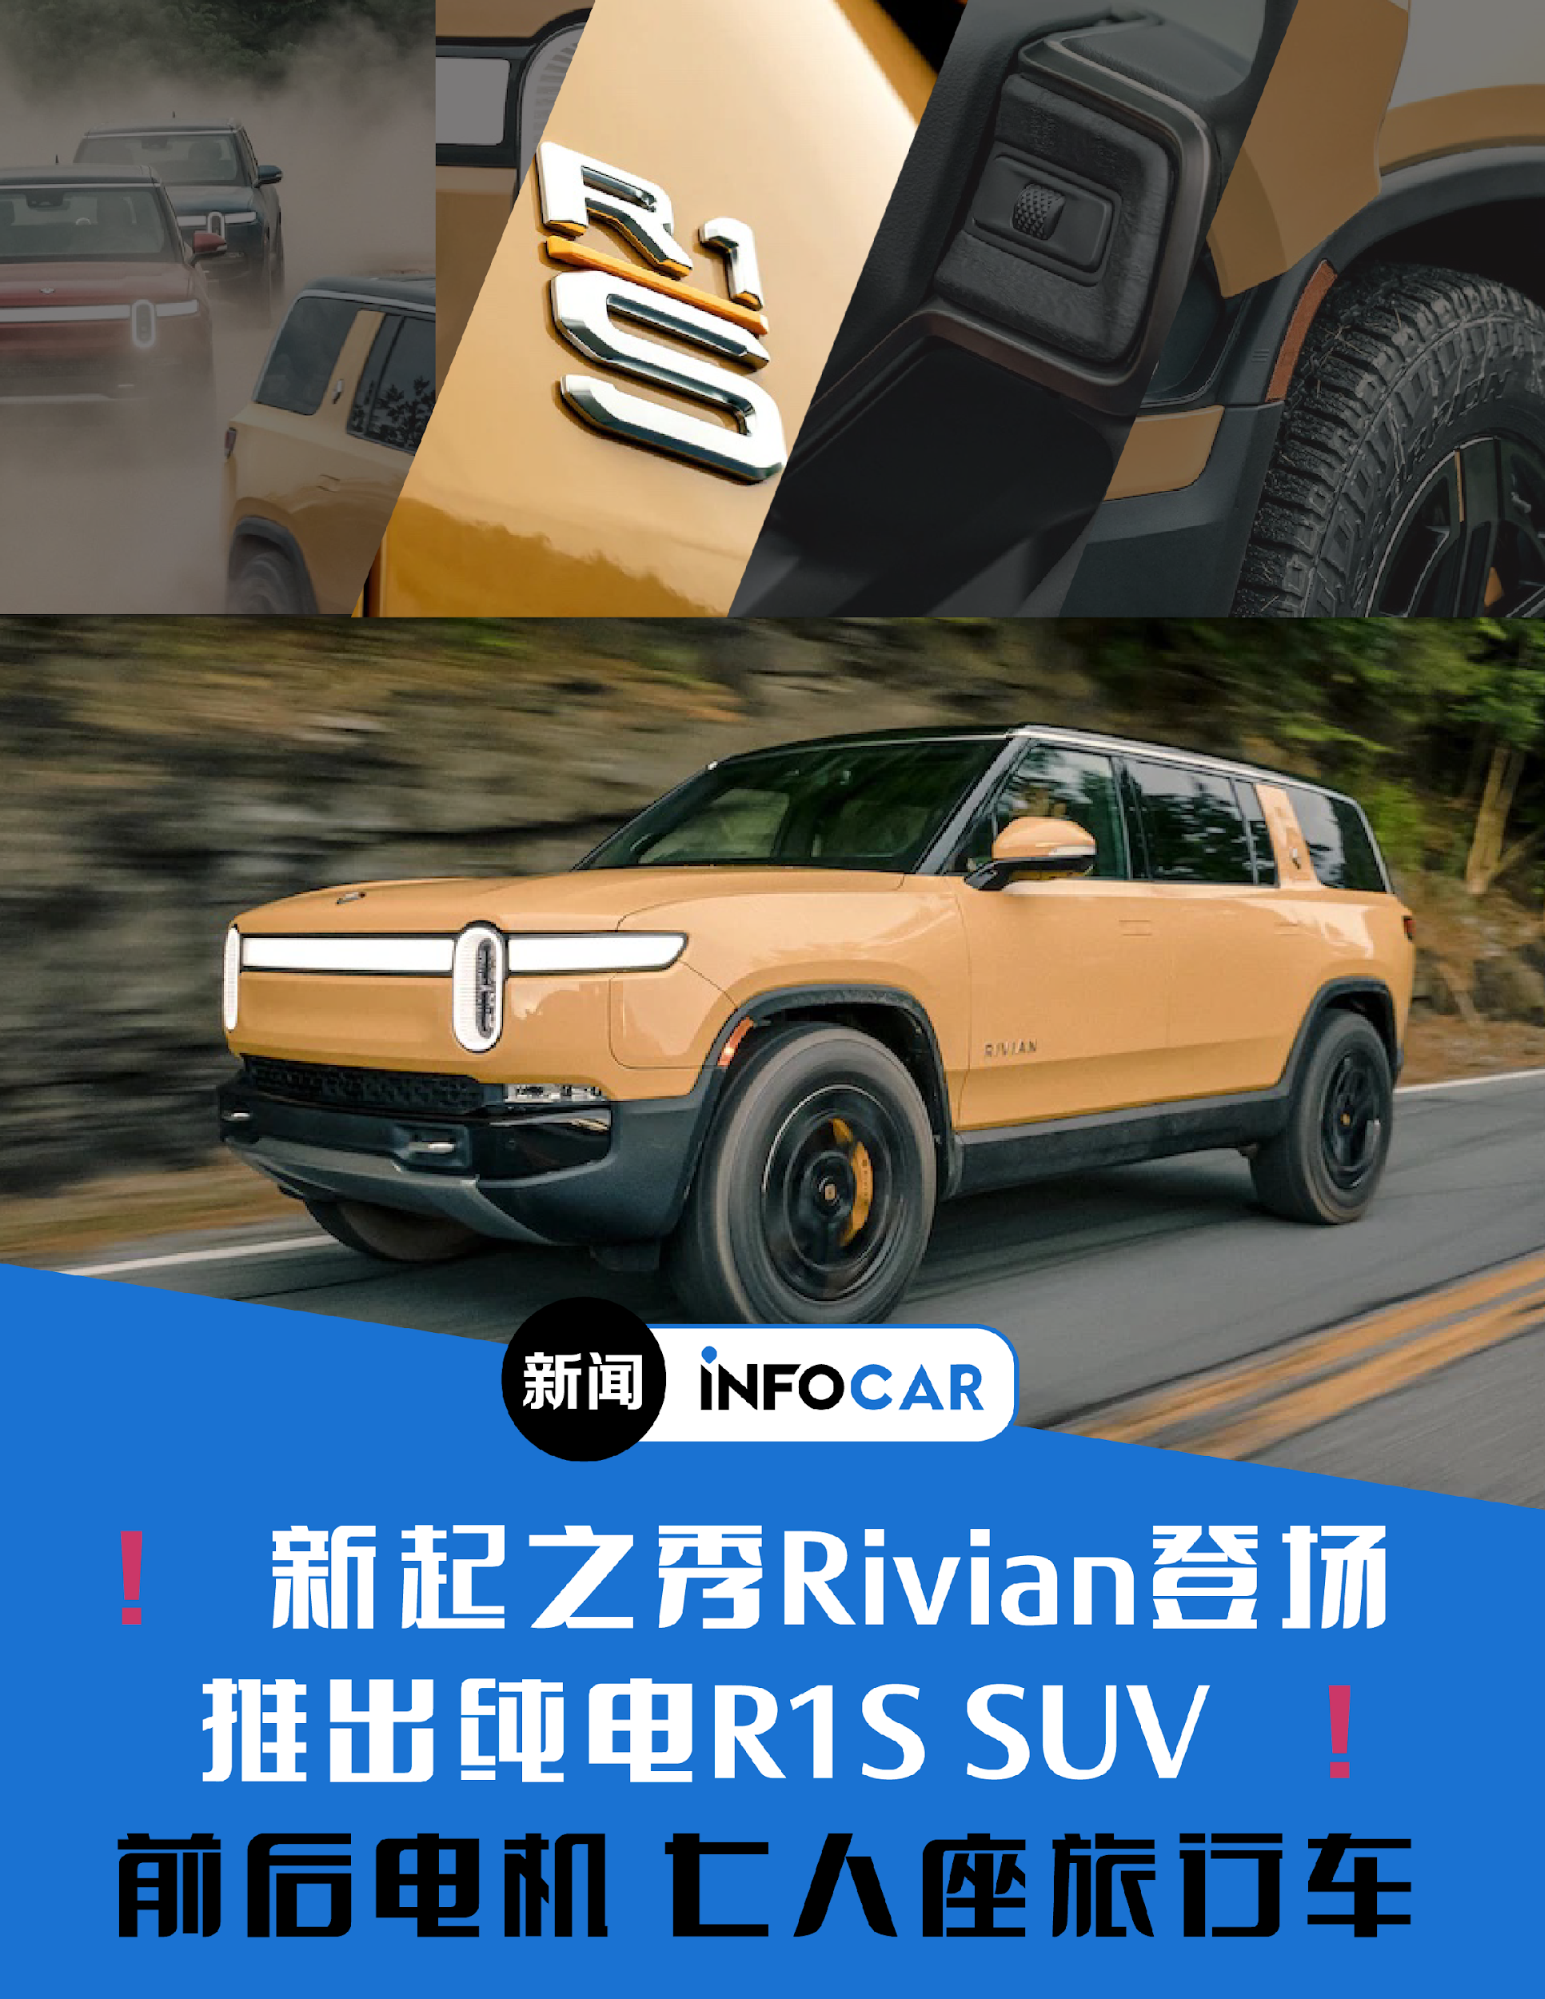 INFOCAR车闻：新起之秀Rivian 推出纯电R1S SUV